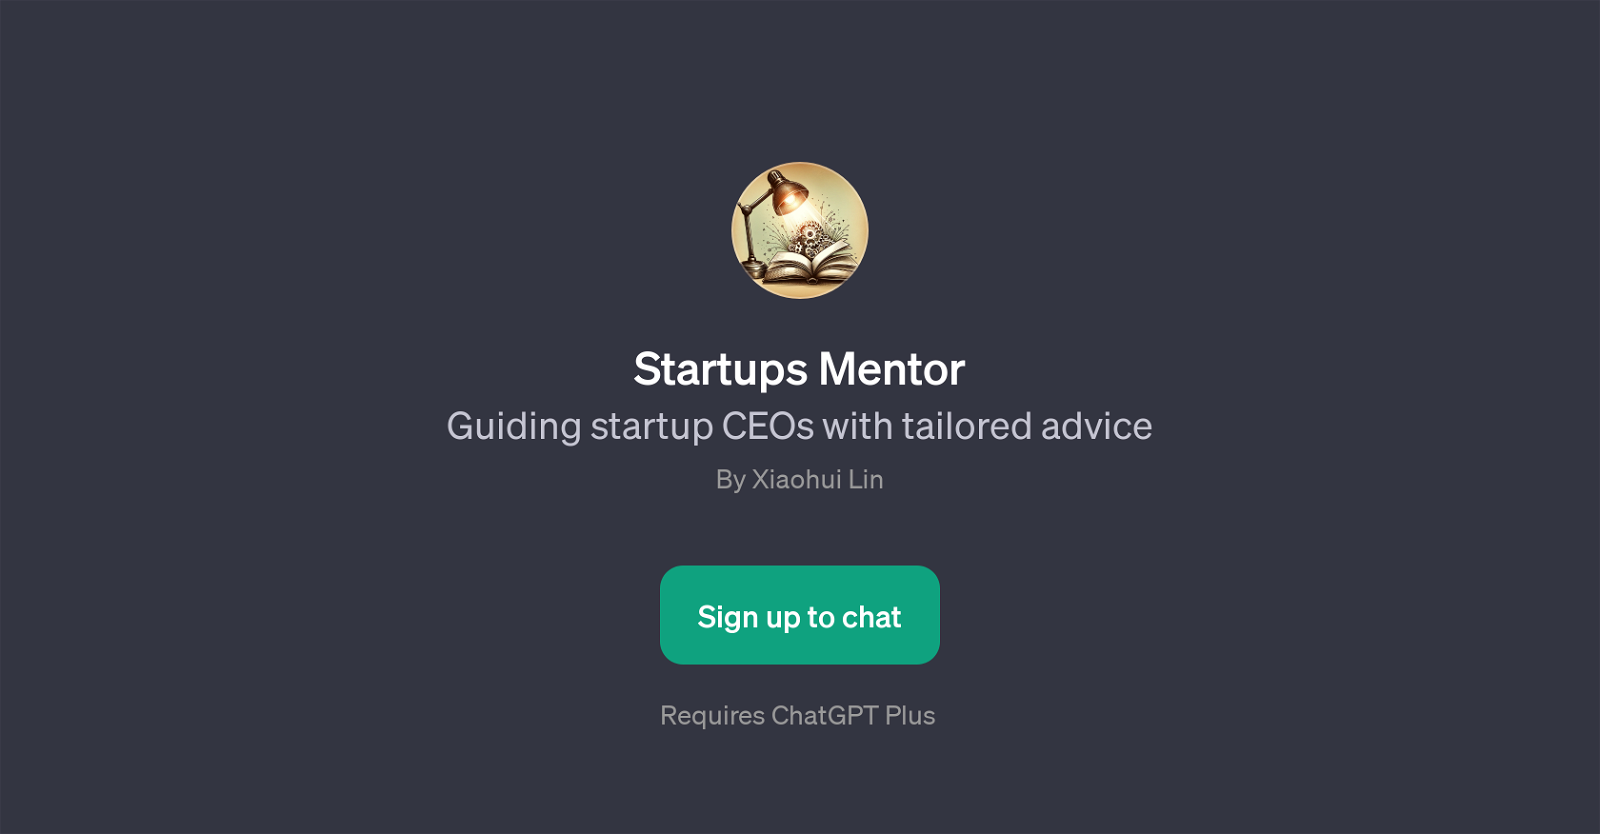 Startups Mentor website